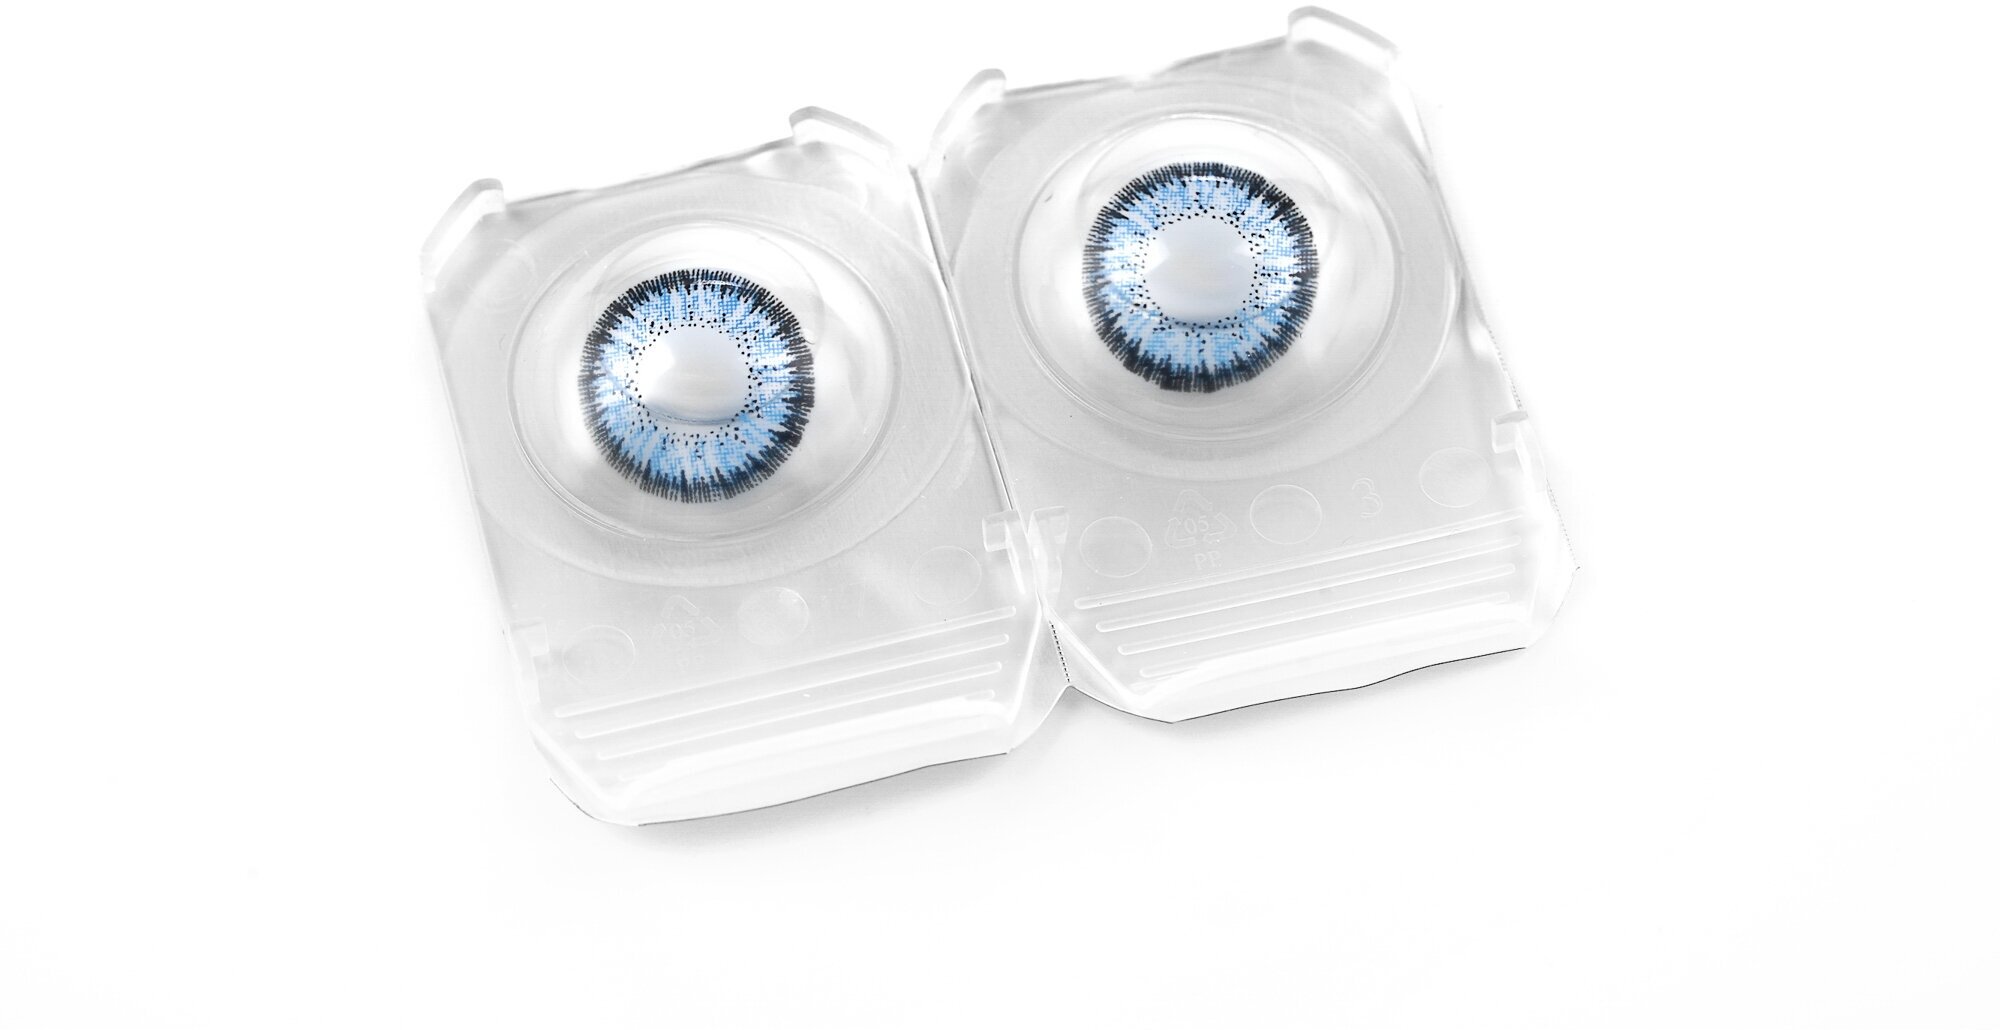 Цветные контактные линзы OKVision Fusion 3 месяца, -7.50 8.6, Blue 2, 2 шт.